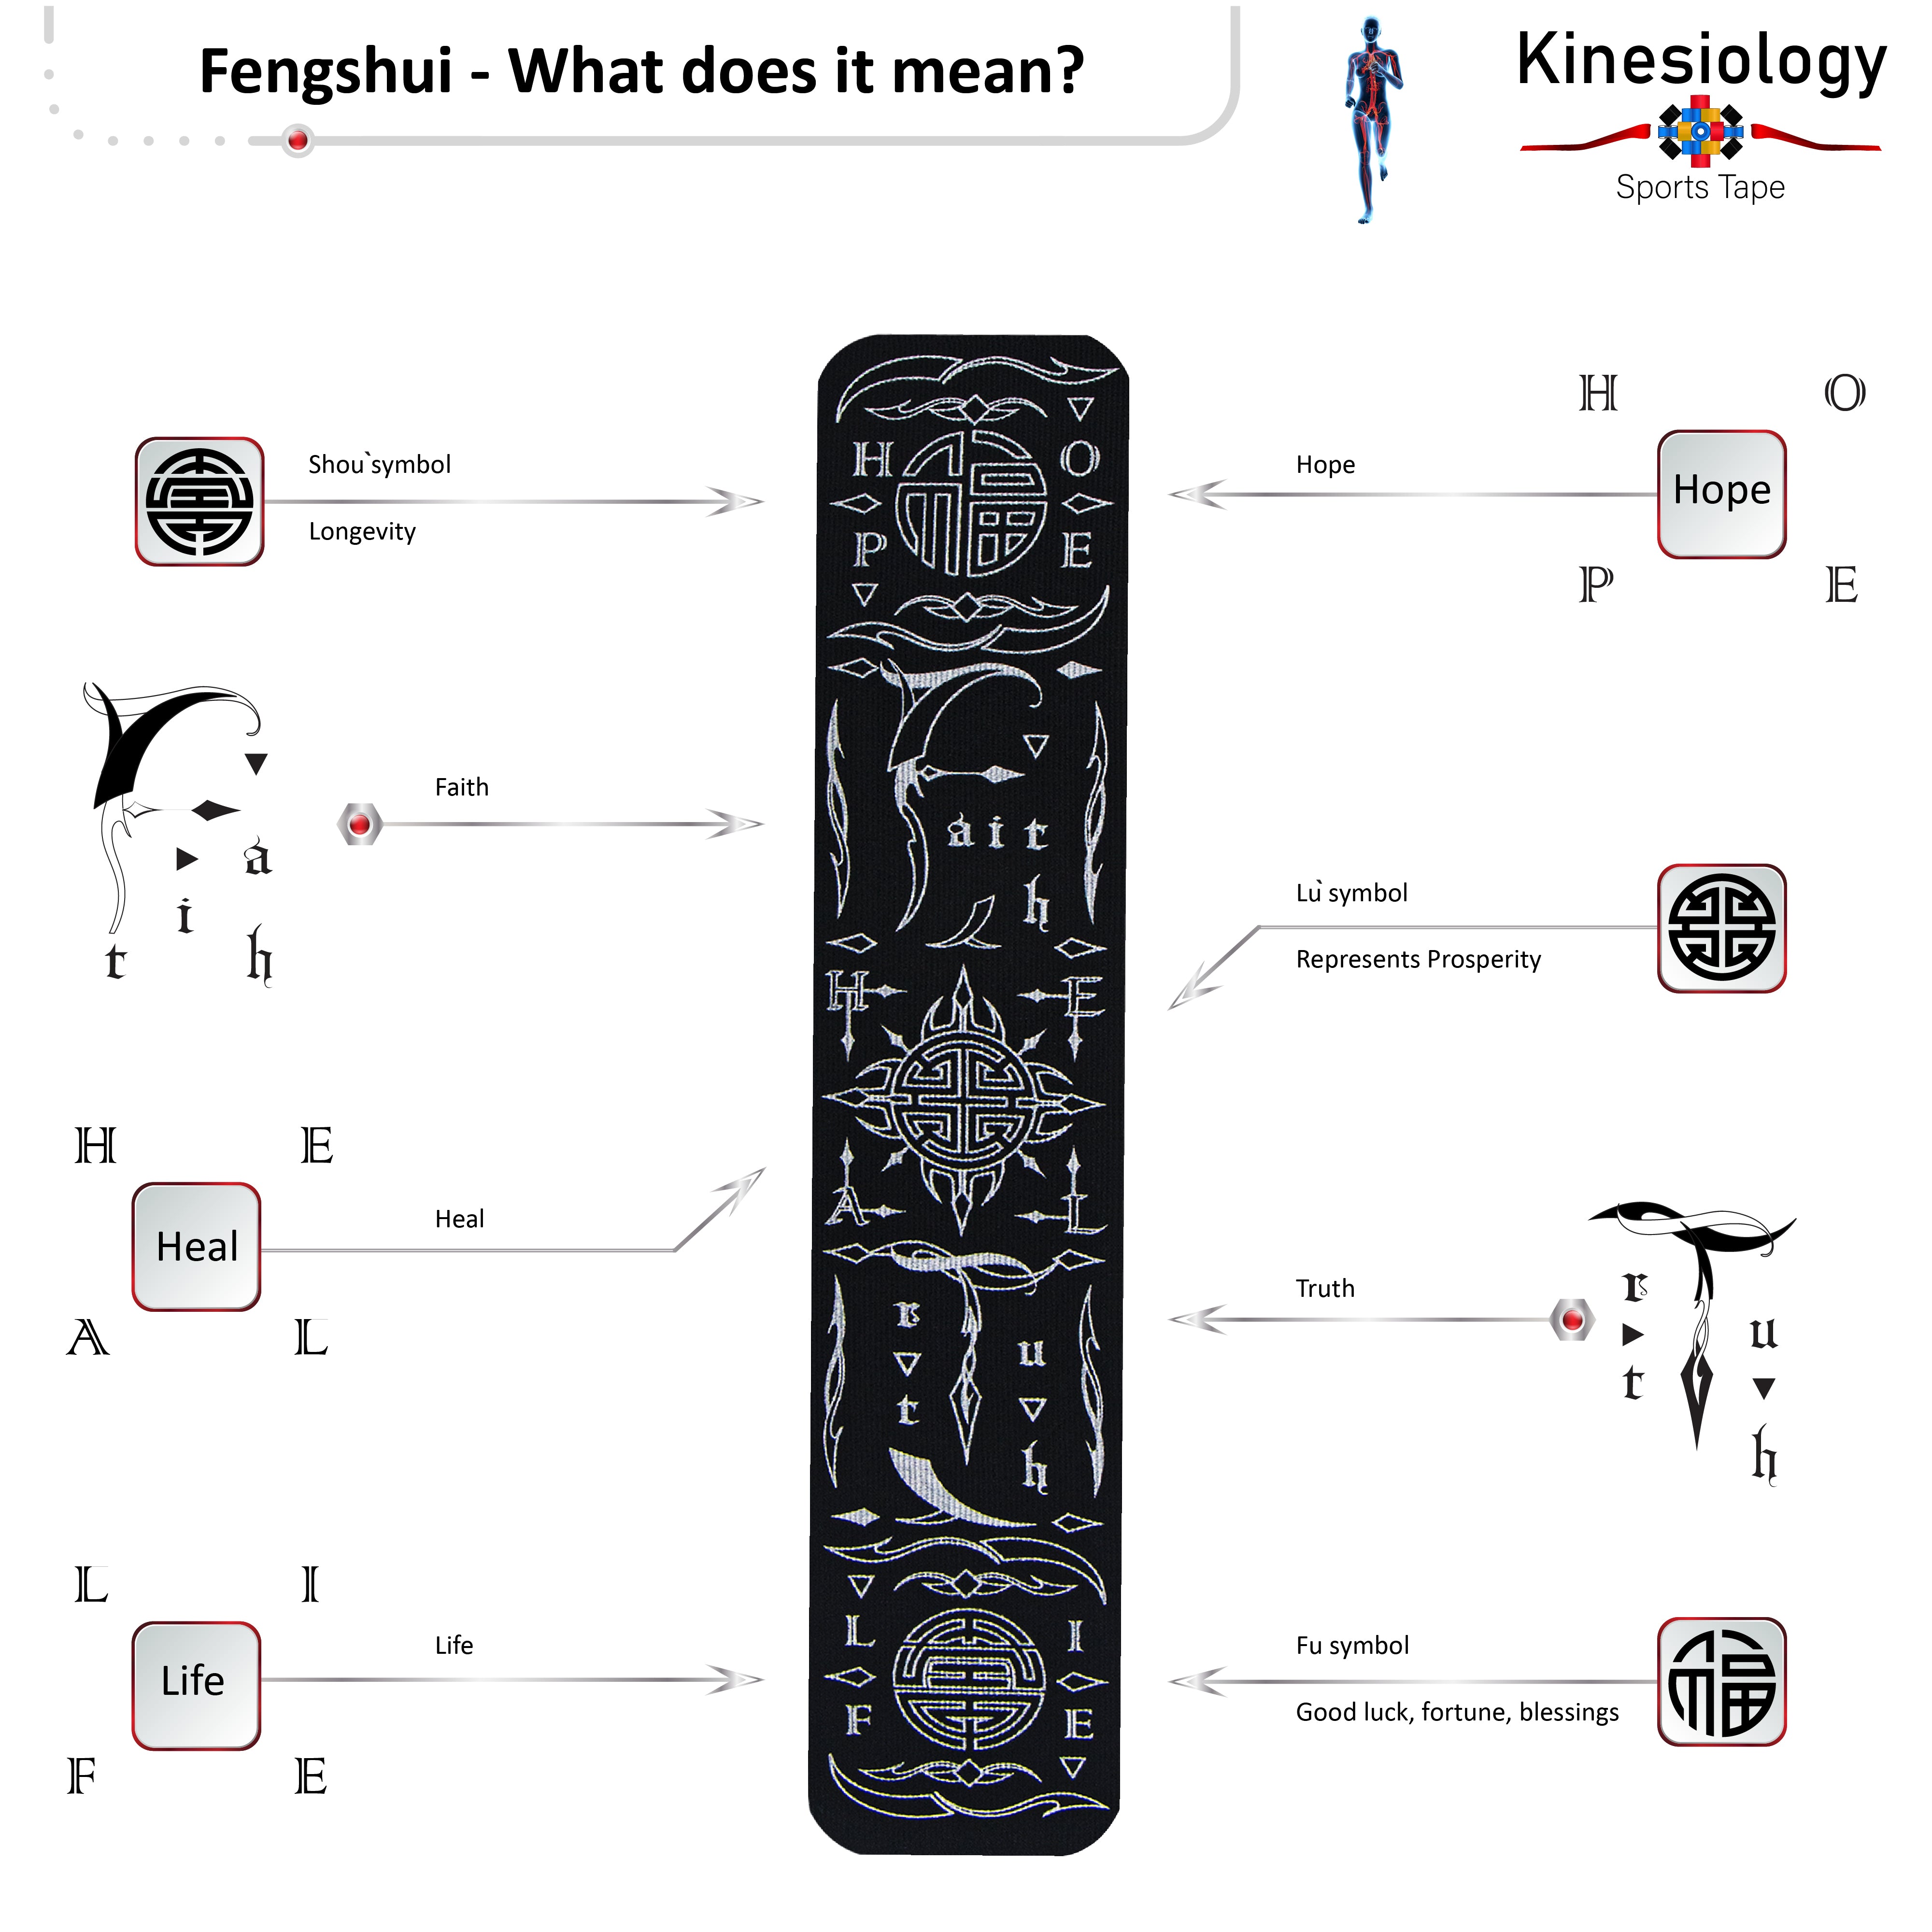 Black Kinesiology Tape Pre Cut with Dispenser - Talisman - Fengshui - Vertical Design